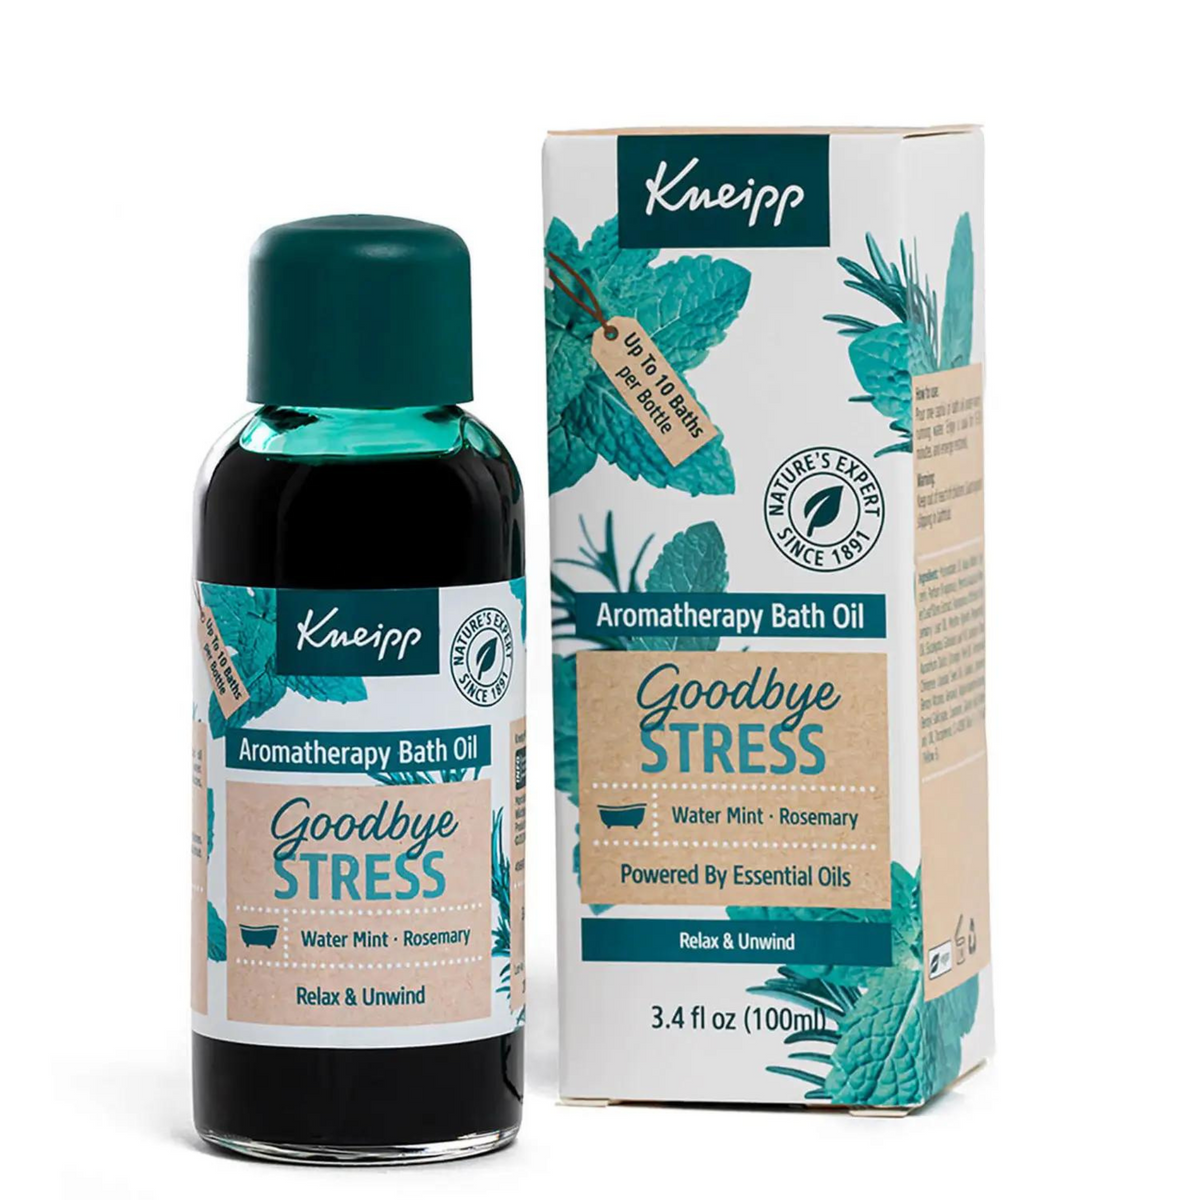 Primary Image of Kneipp Goodbye Stress Bath Oil (3.4 fl oz)